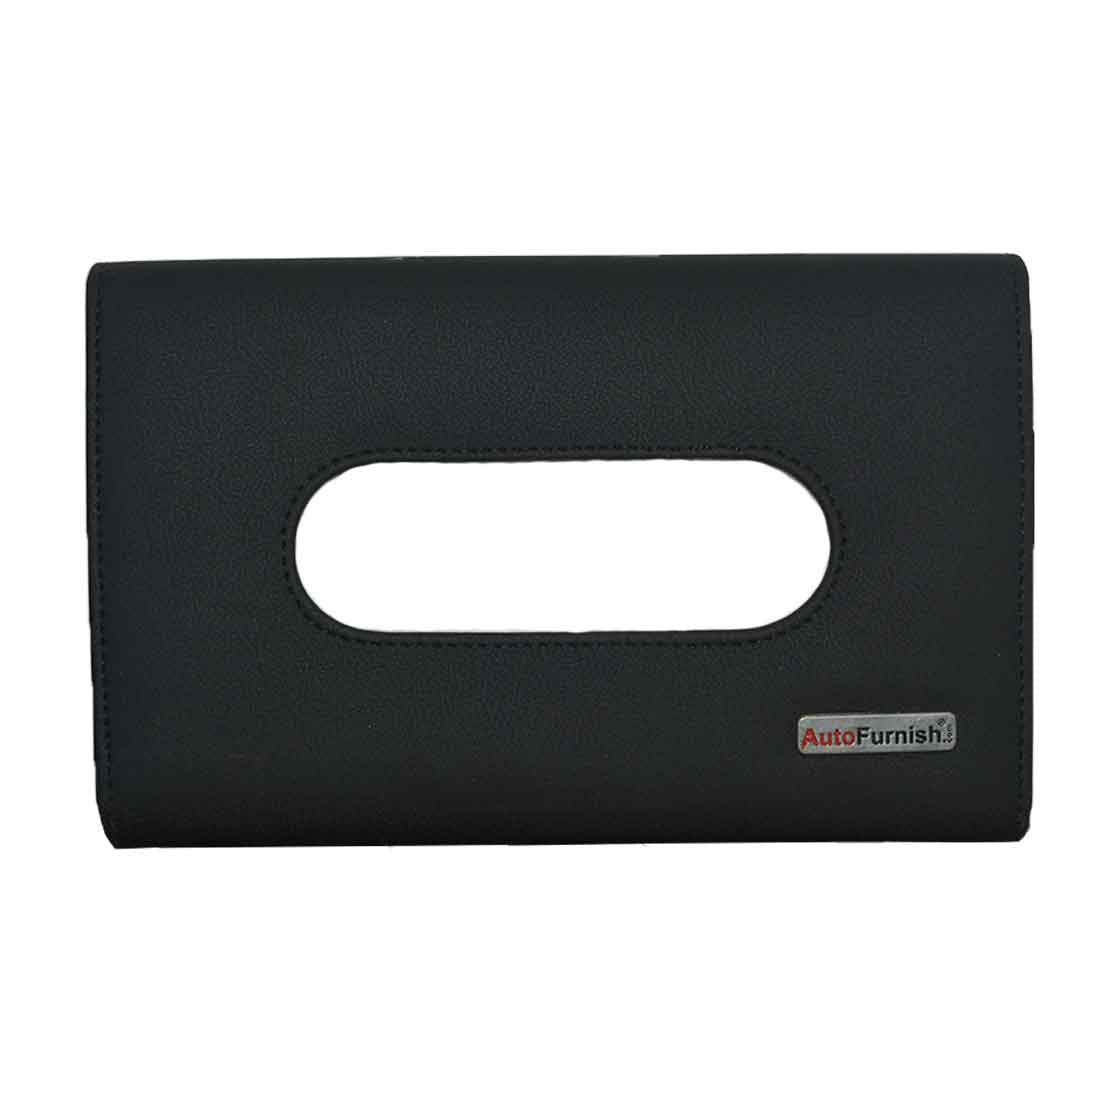 PU Leather Tissue Box Cover Holder with Single Layer Strap for Car Headrest/Armrest/Visor